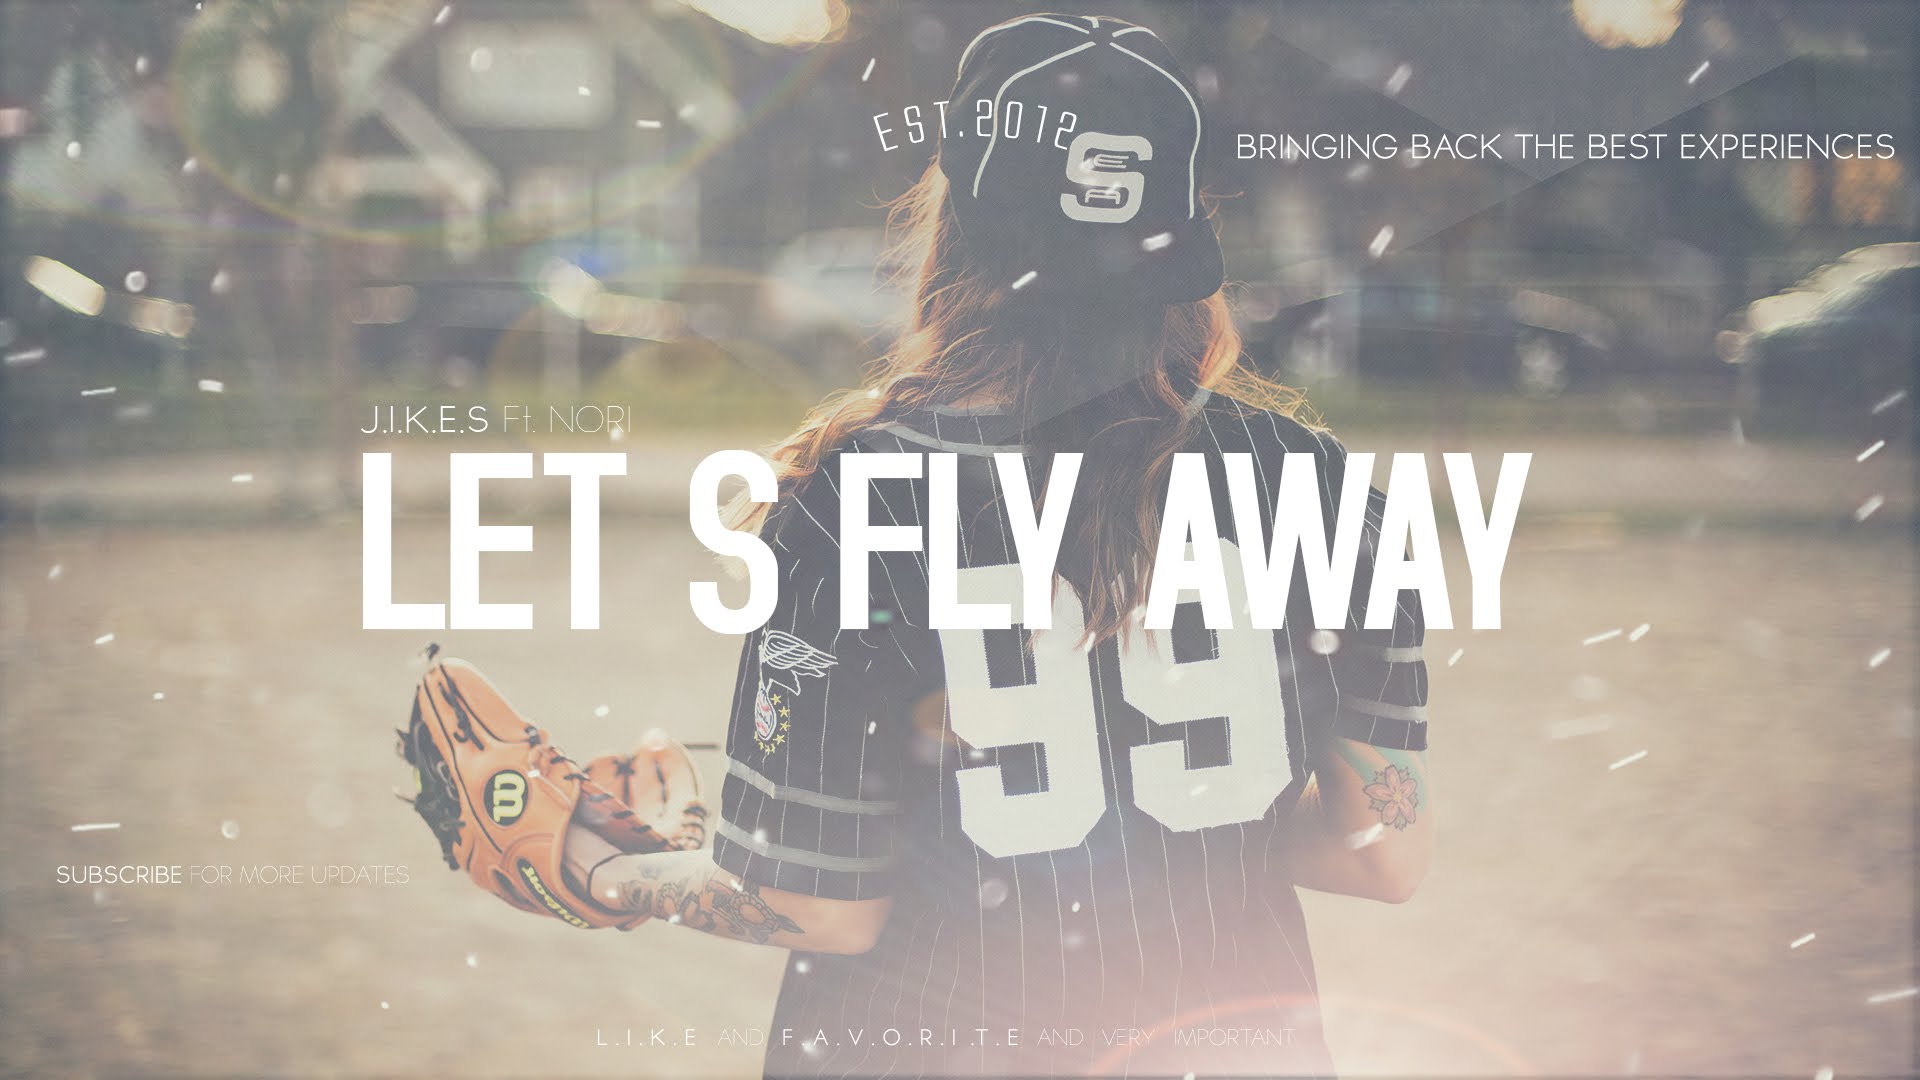 Хороший experience. Jikes ft. Nori Let's Fly away pt.2. Tom Enzy feat. Wilhelmina Melodies. Levo - Let's Fly away. Experience is best.